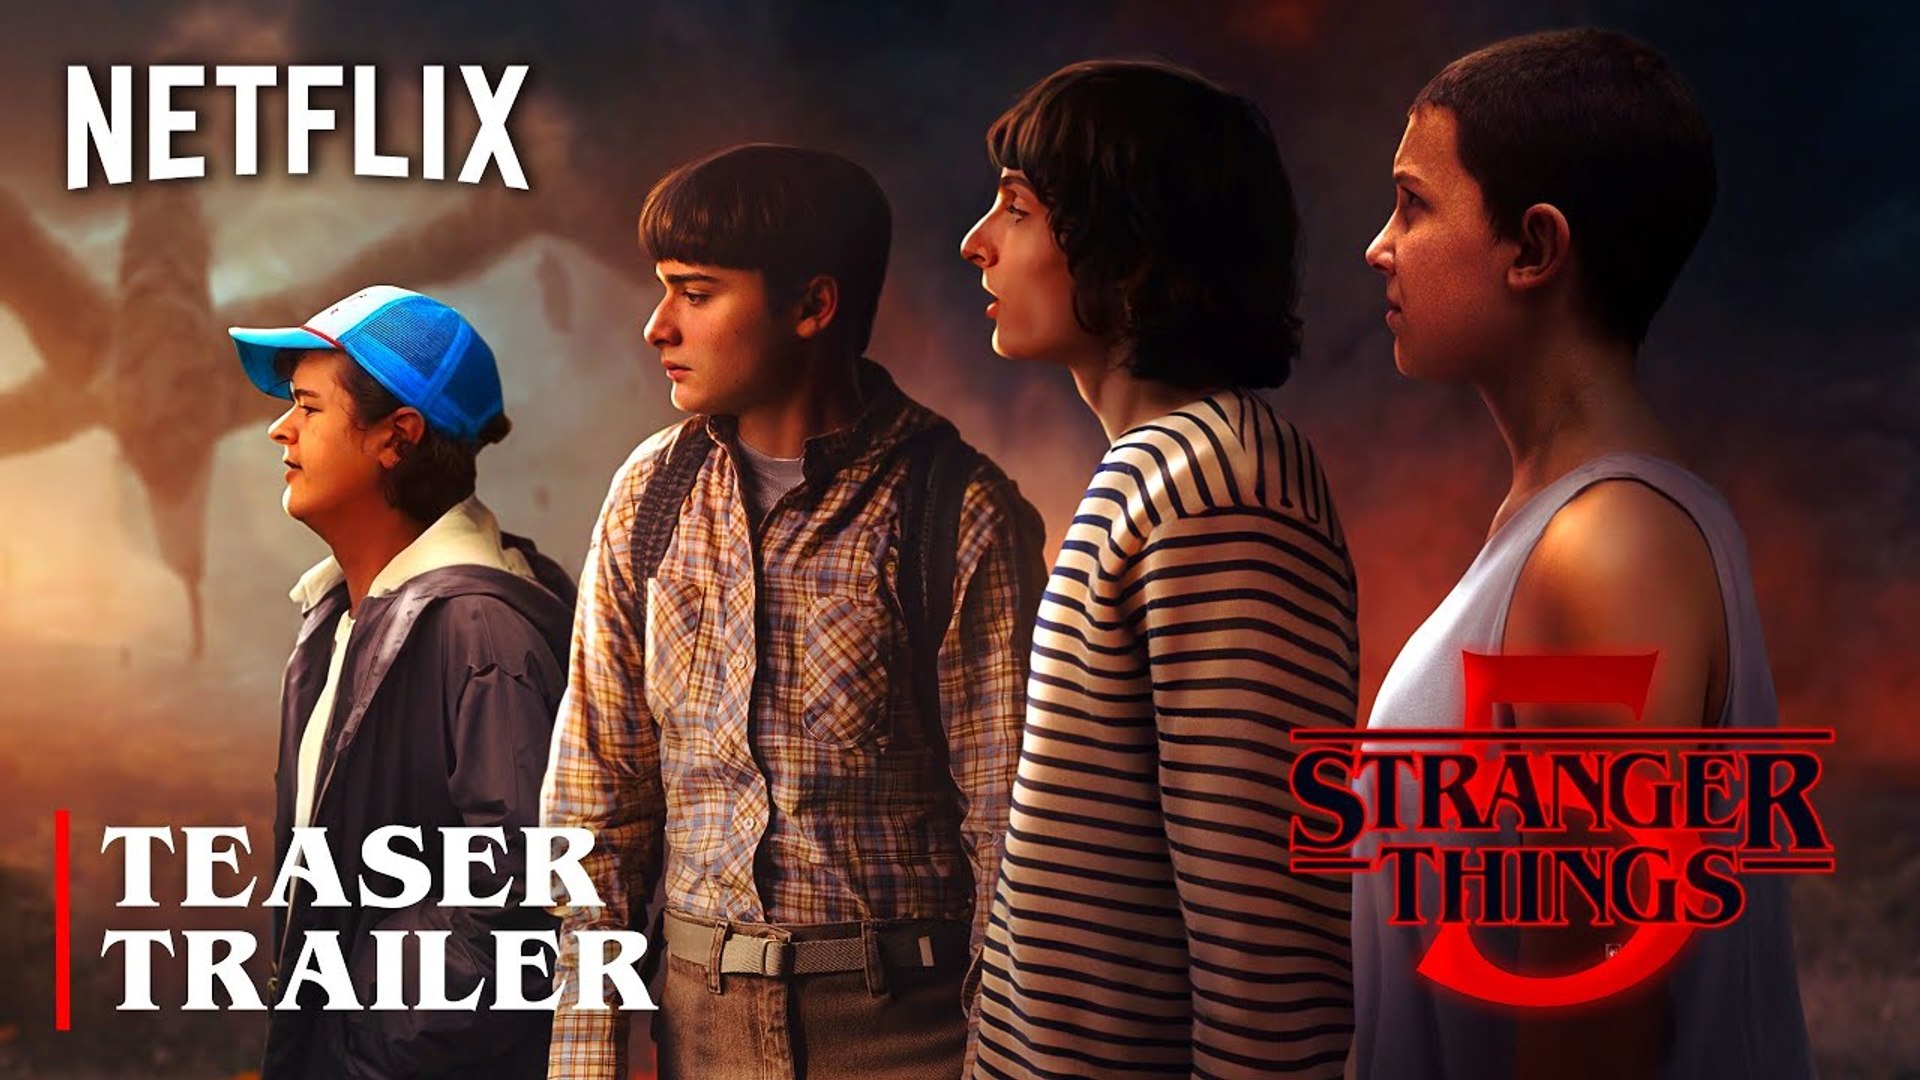 STRANGER THINGS Season 5 - First Look Trailer (2024) Netflix (HD) in 2023